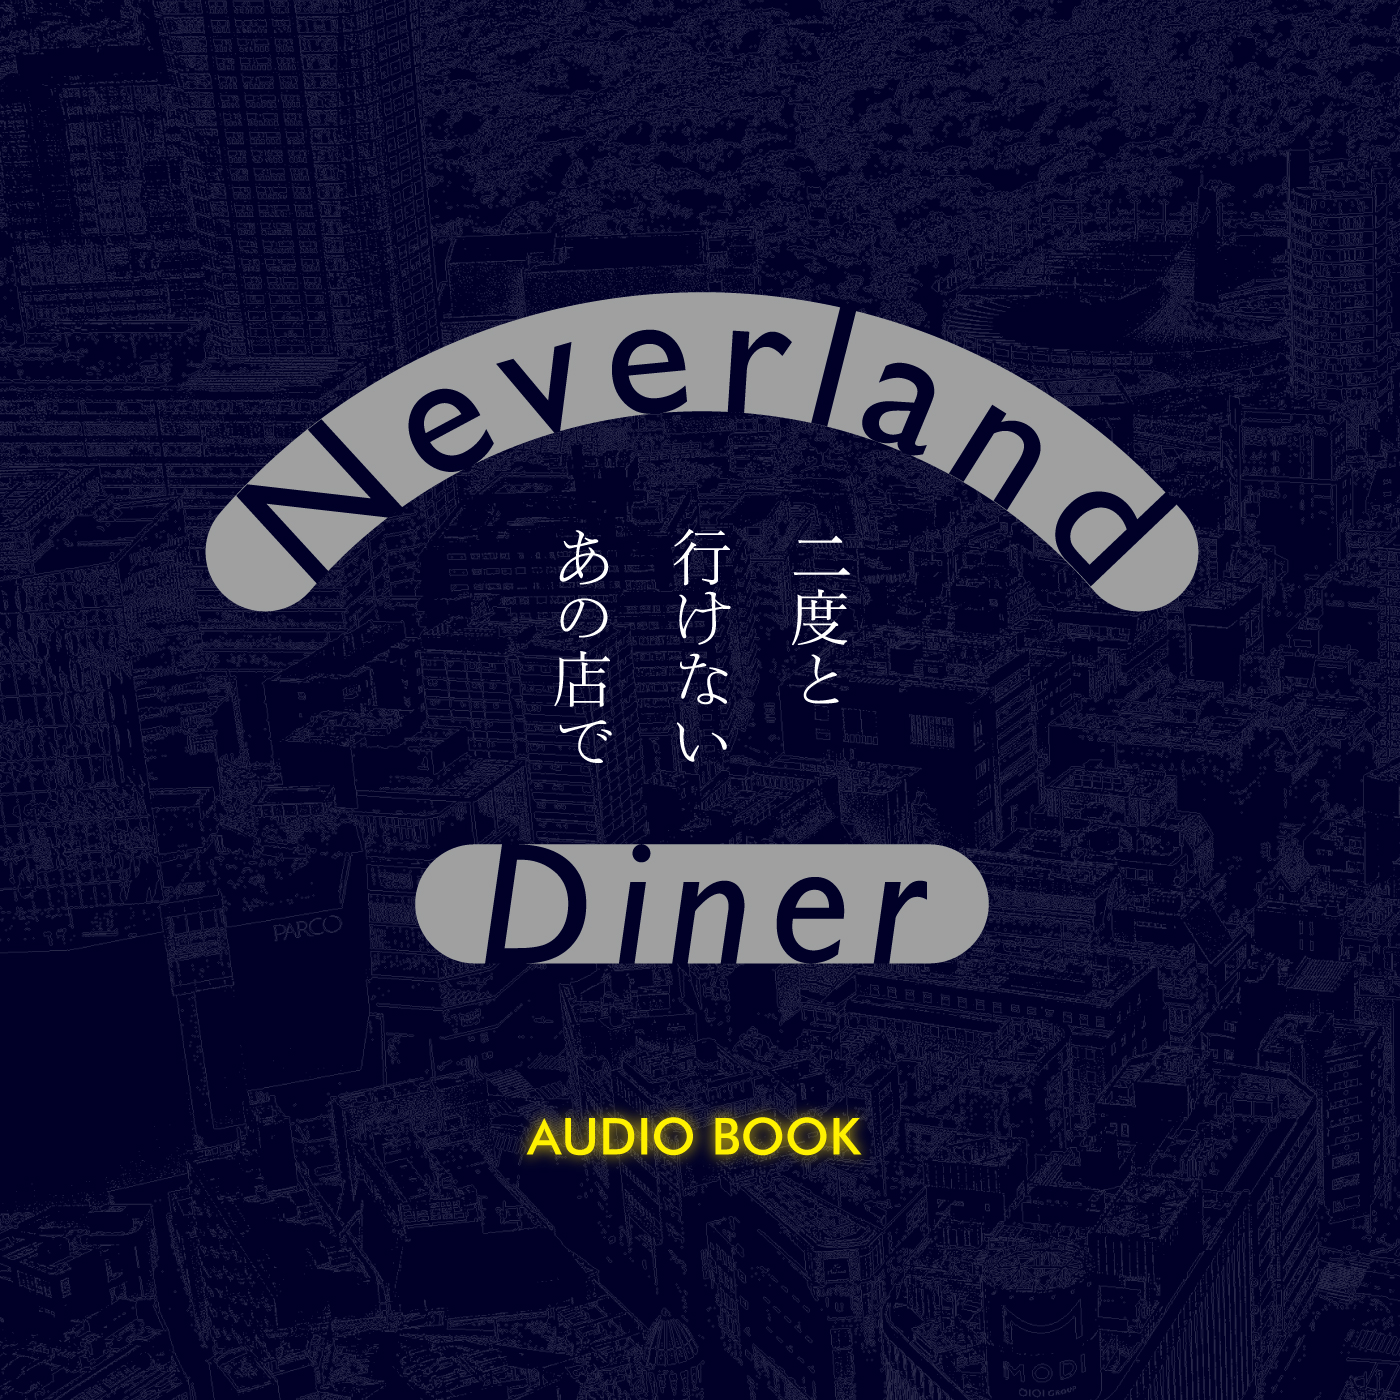 Neverland Diner Audio Book